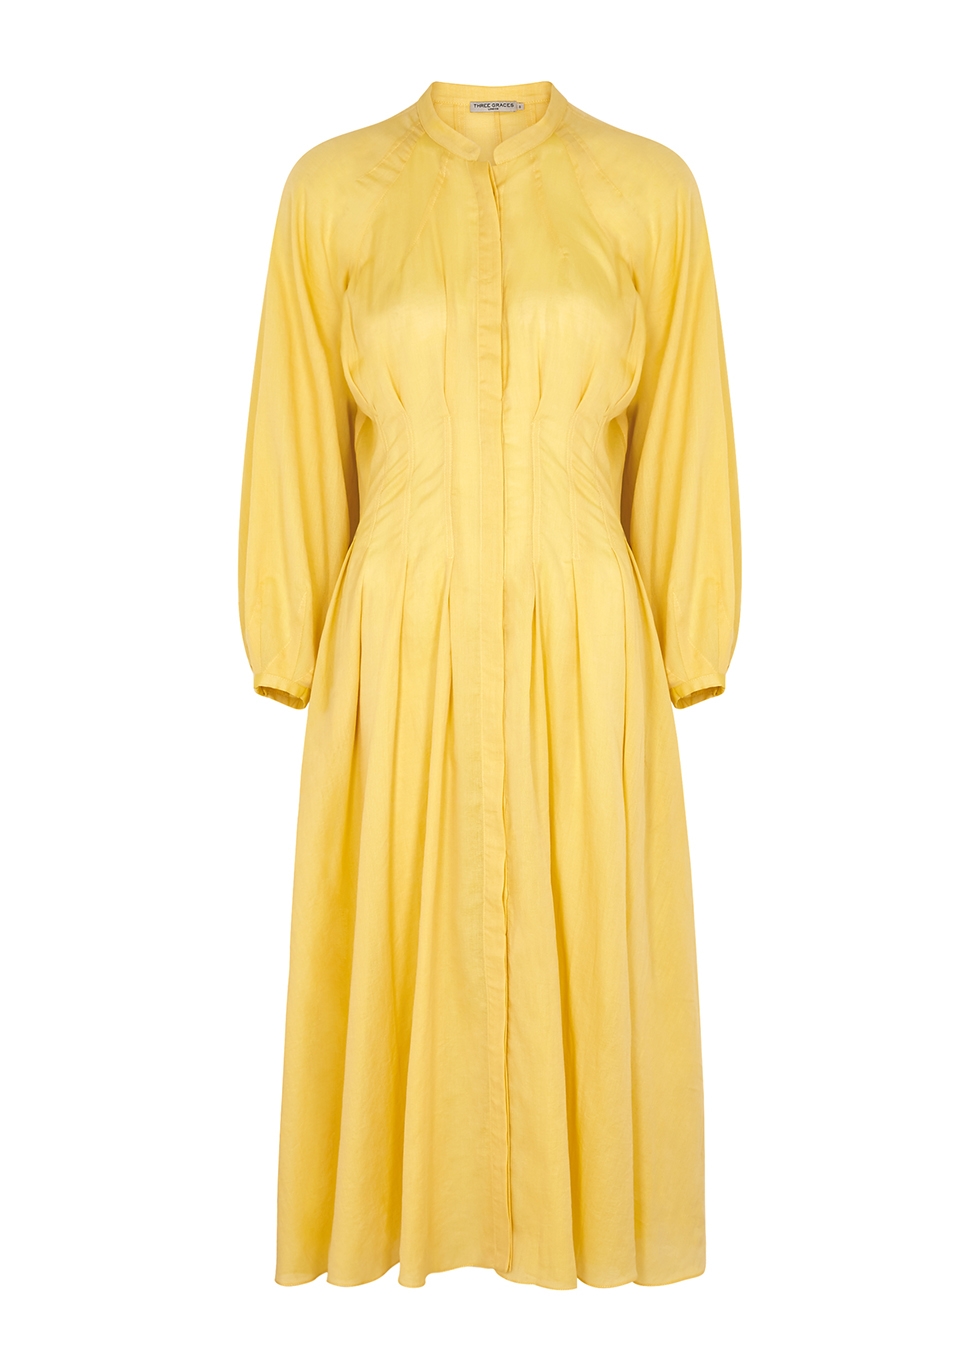 Valeraine yellow cotton midi dress